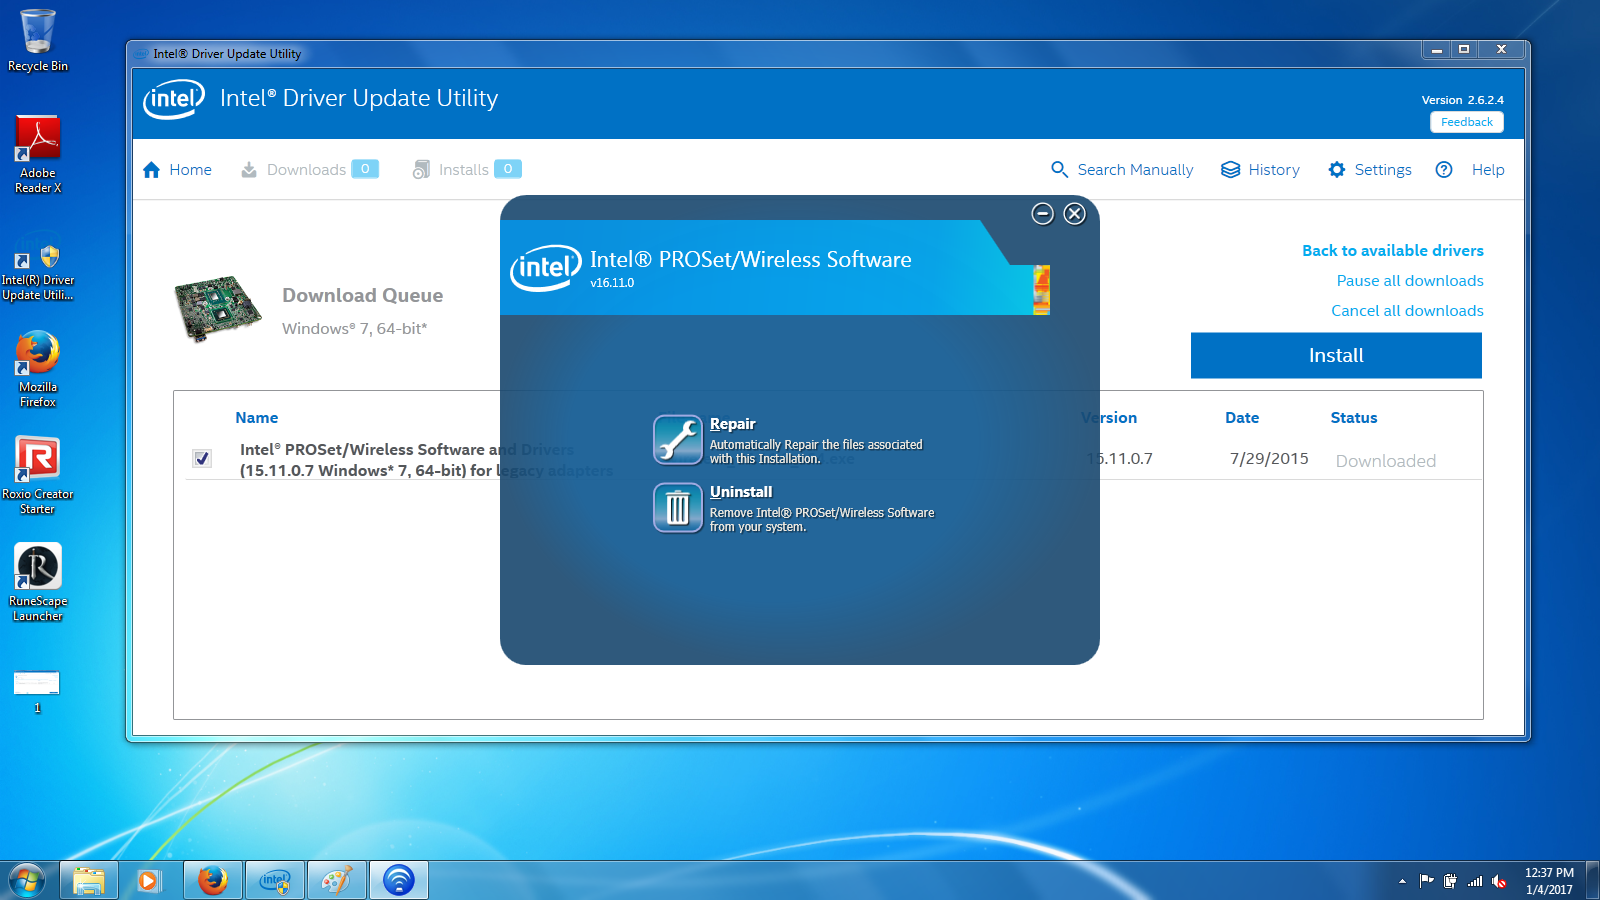 Intel graphics driver for windows. Intel Driver update. Intel Driver последняя версия. Утилита Интел. Intel Driver update Utility installer.